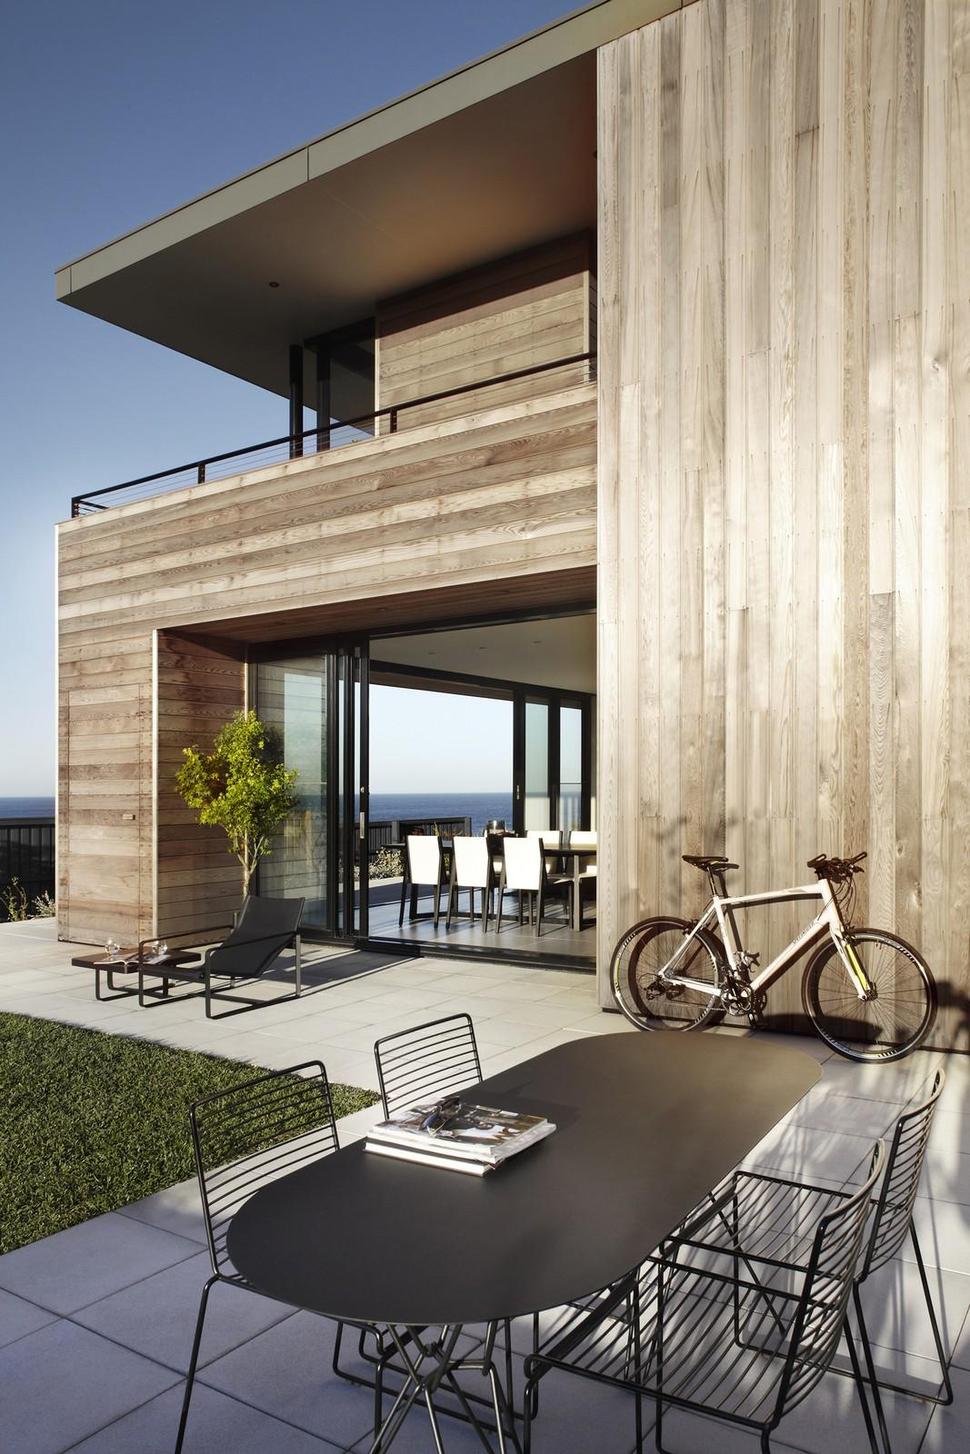 ocean-front-home-270-deg-views-elevated-perch-8-patio.jpg